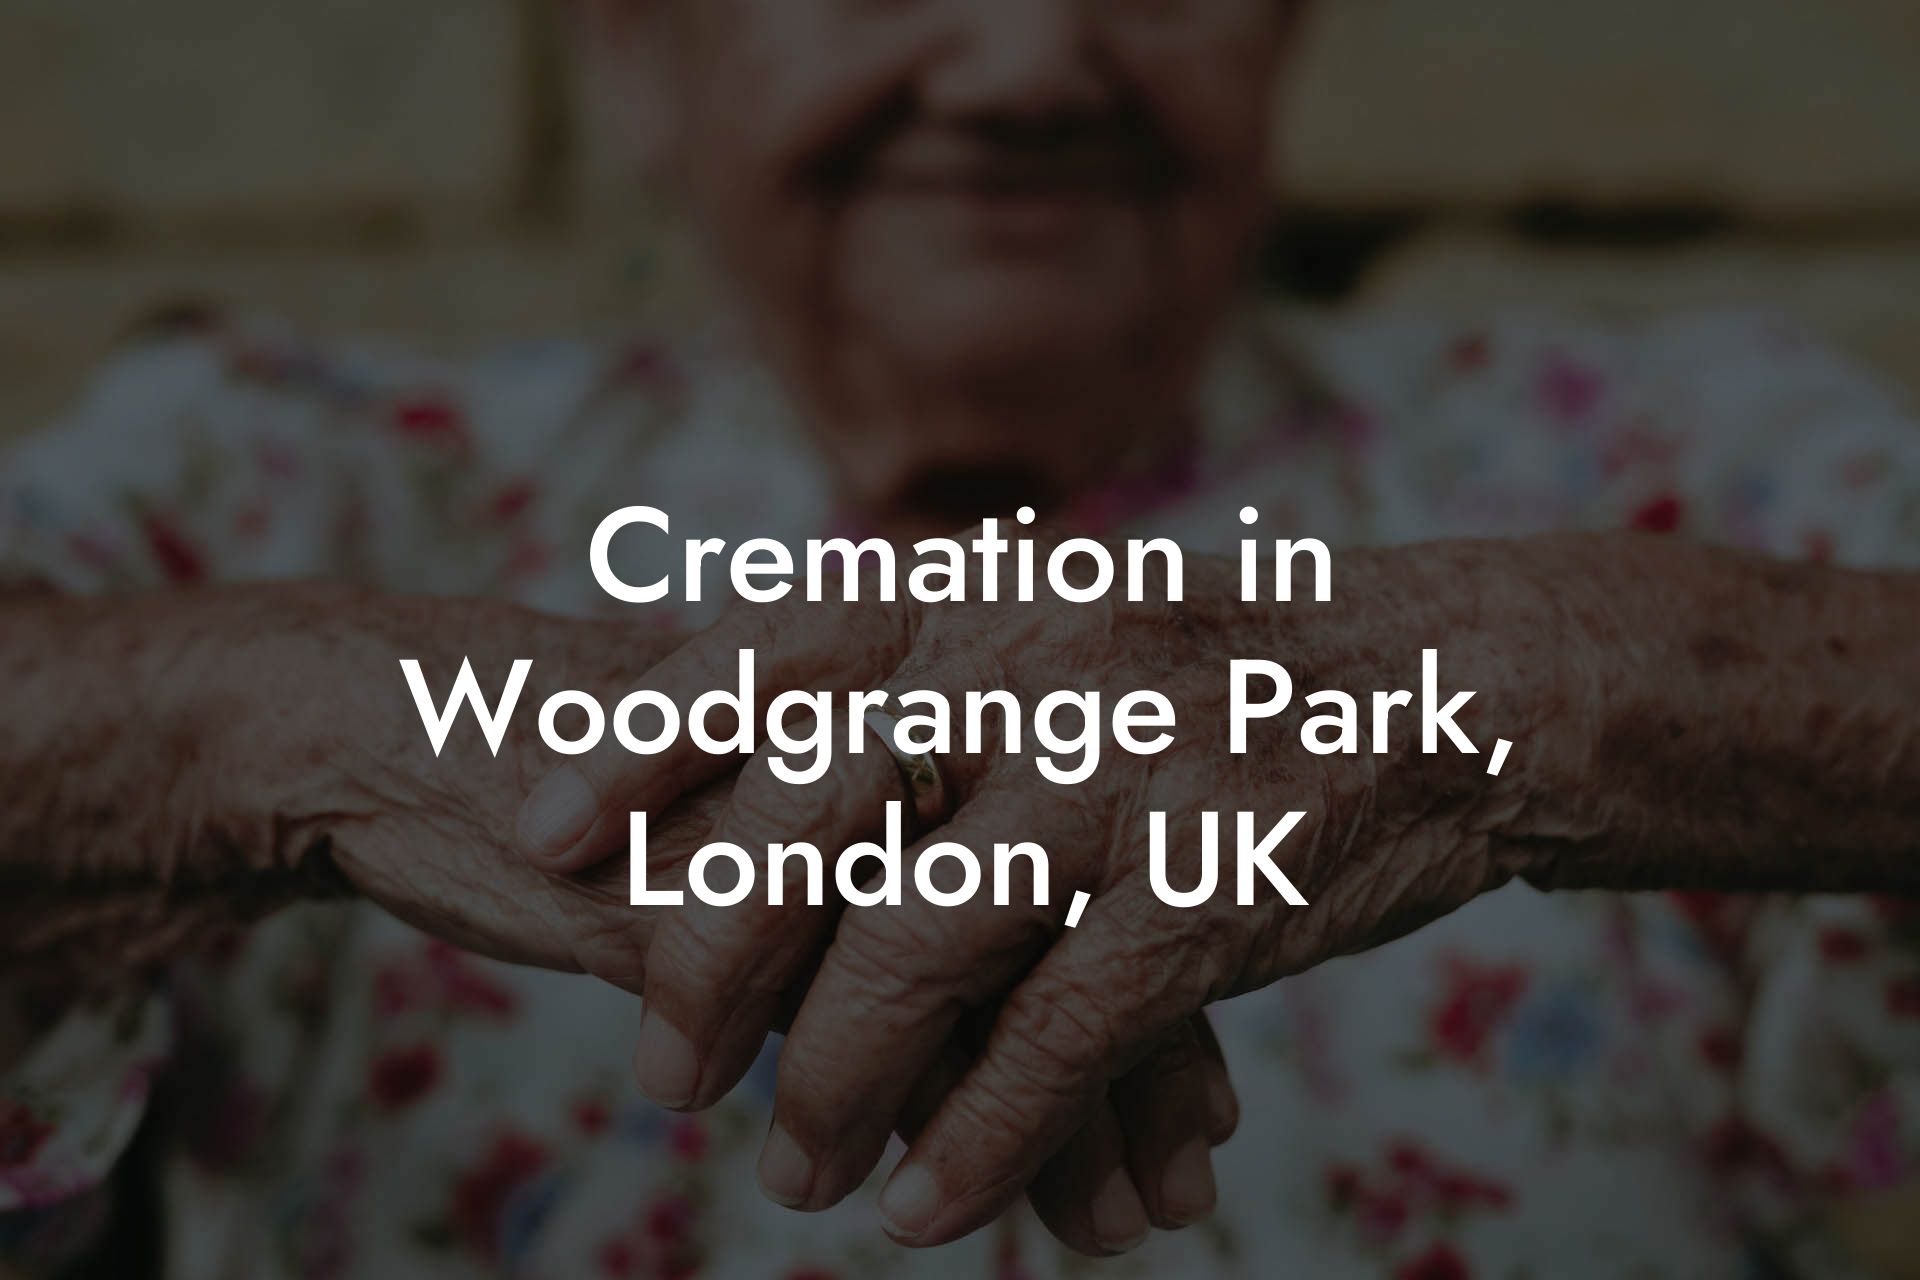 Cremation in Woodgrange Park, London, UK